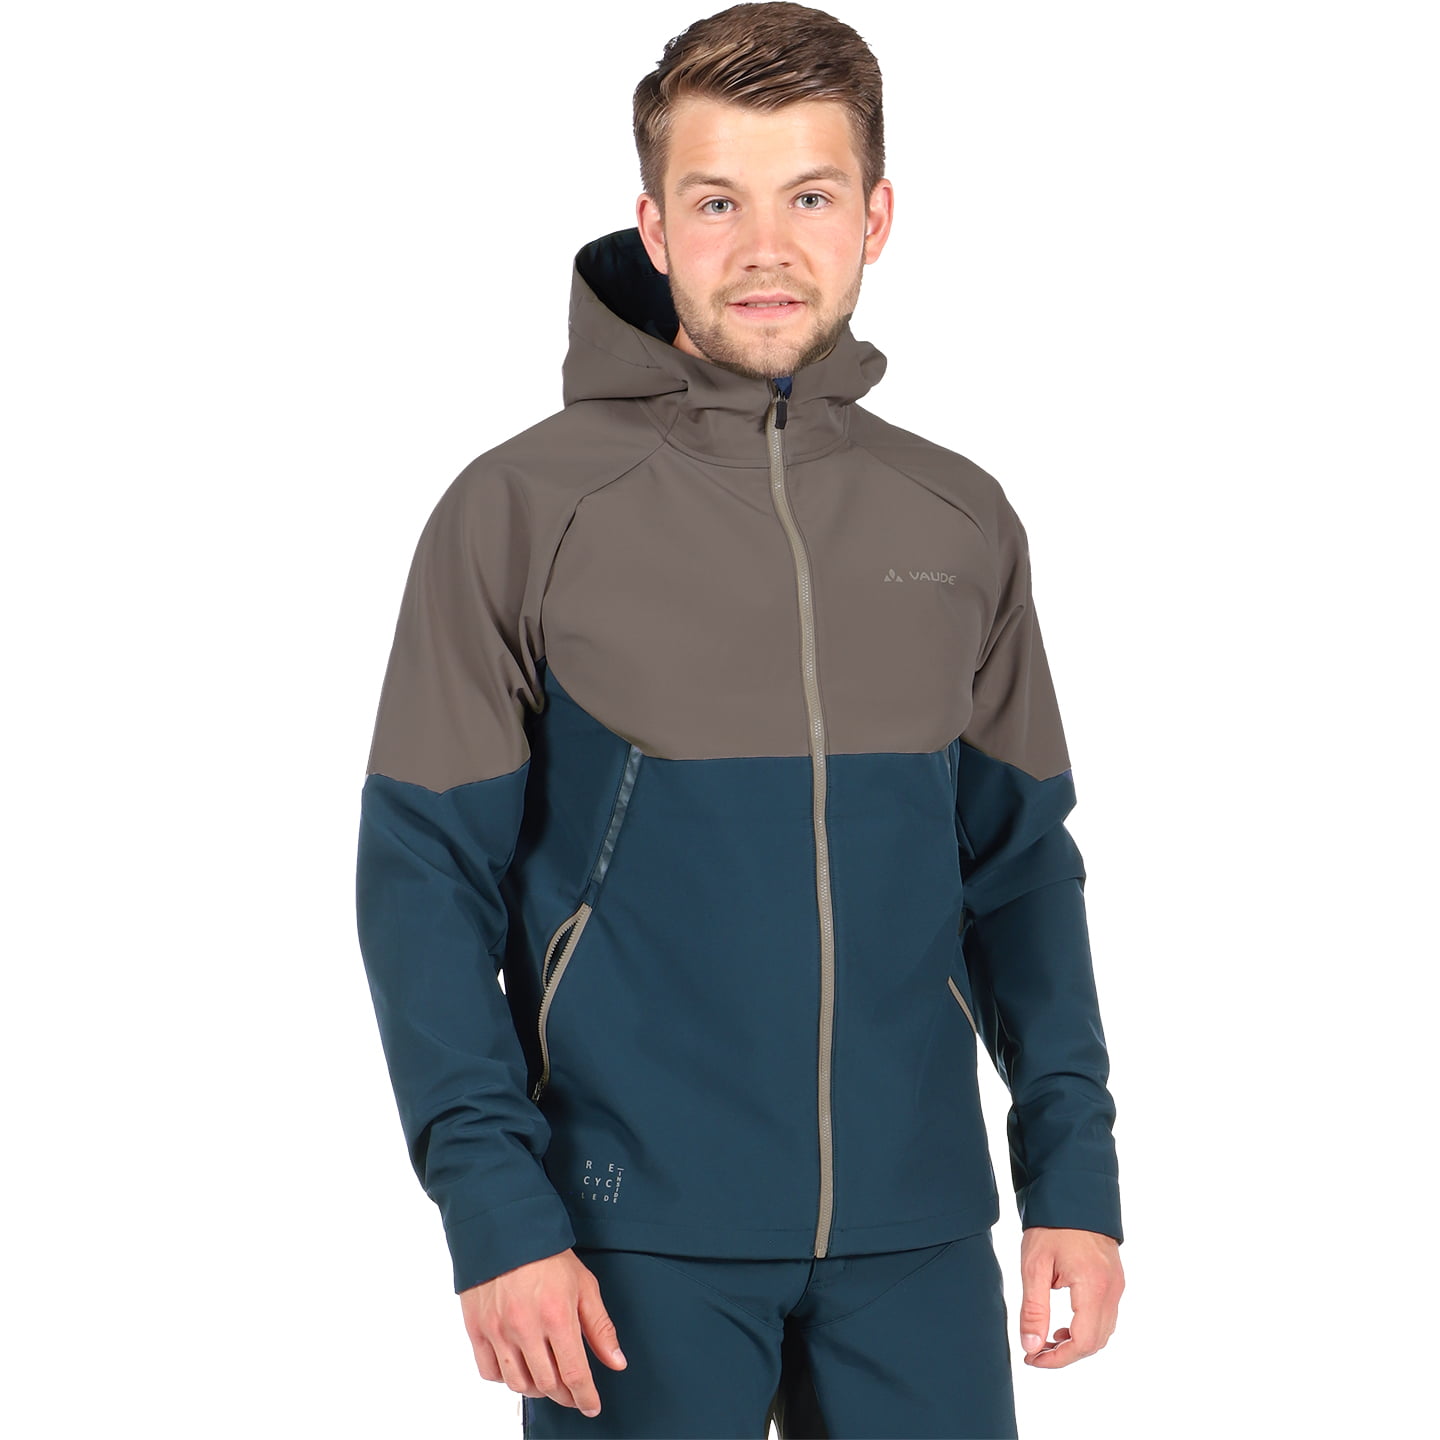 Qimsa MTB Winter Jacket, for men, size L, Winter jacket, Cycle clothing